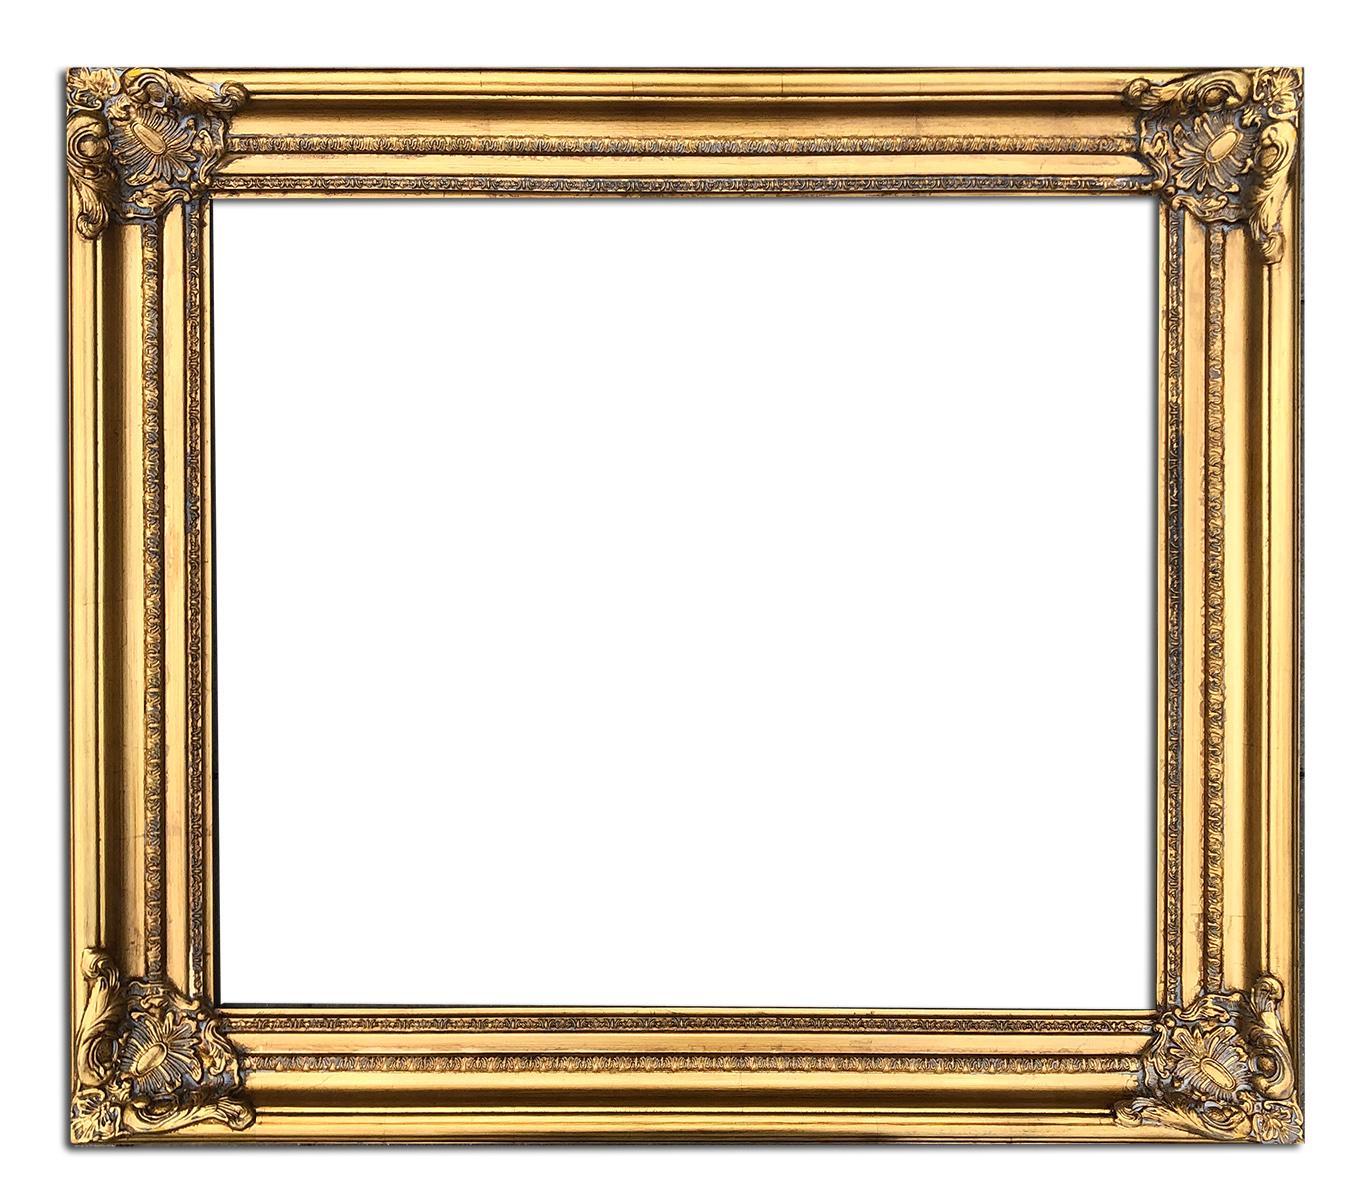 Wooden frame in golden color, 20x24 ins or 50x60 cm